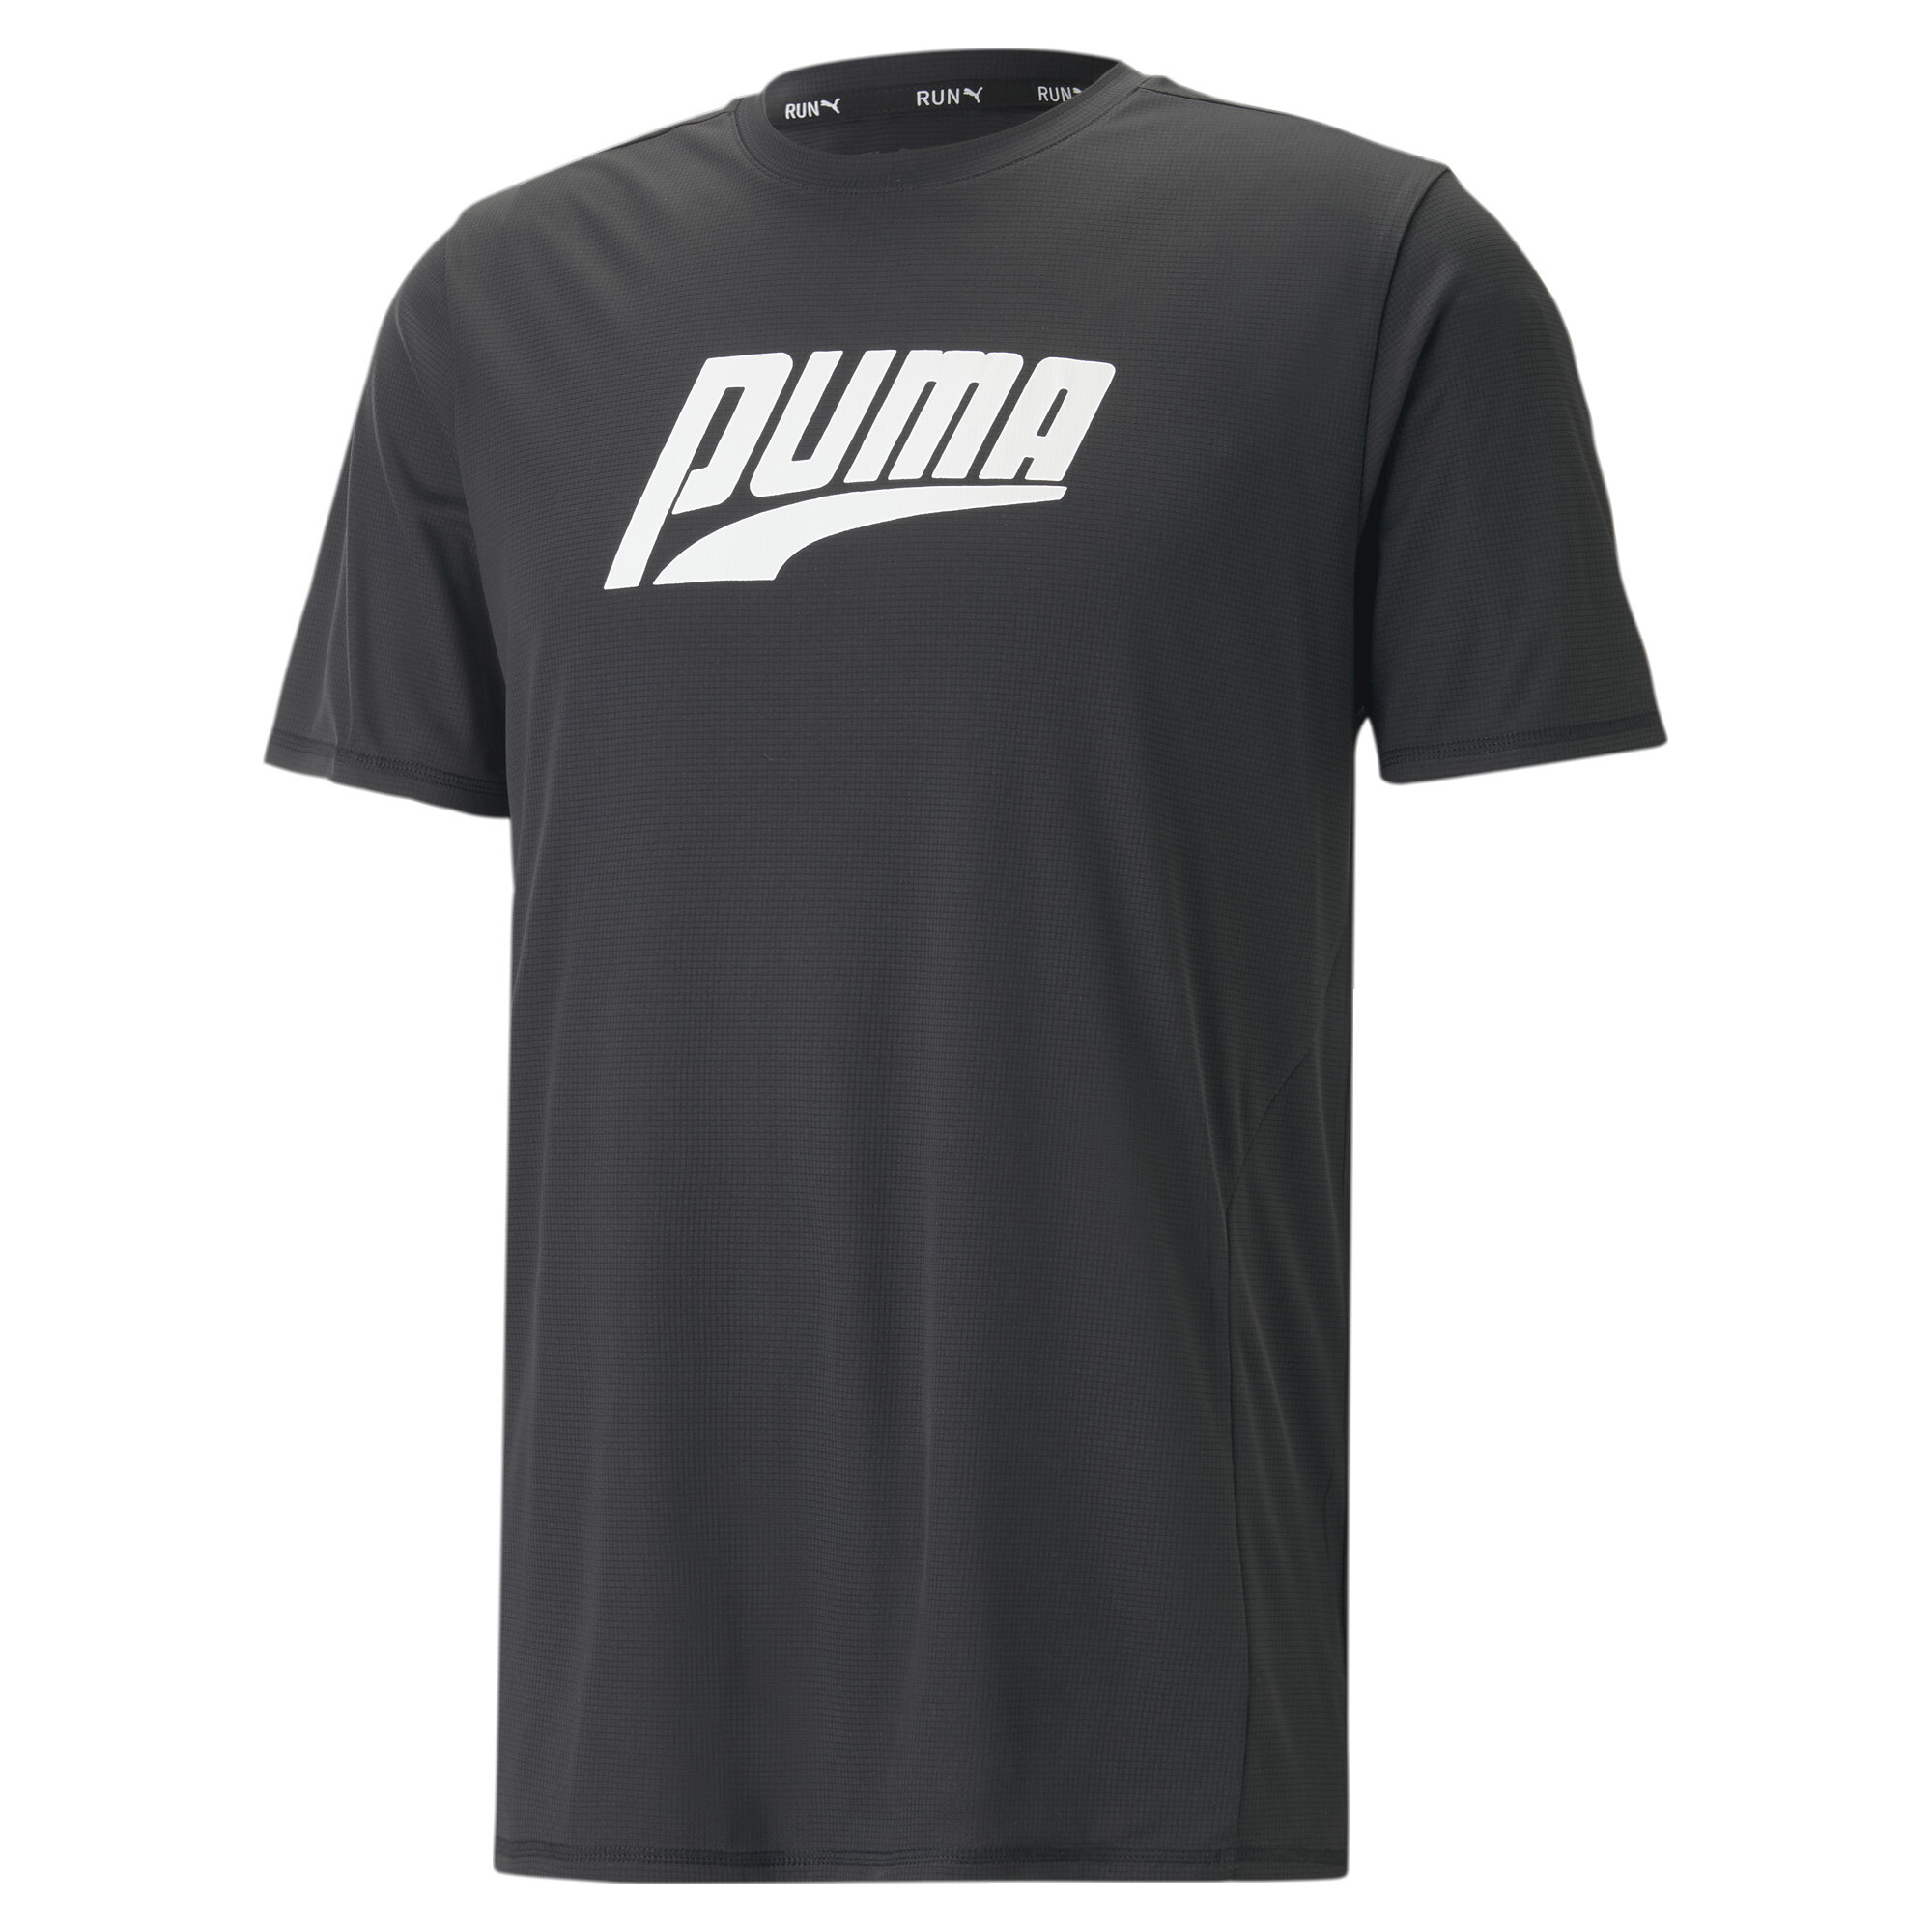 Men's PUMA RUN FAVOURITE Short Sleeve Graphic Running T-Shirt Men In Black, Size XS